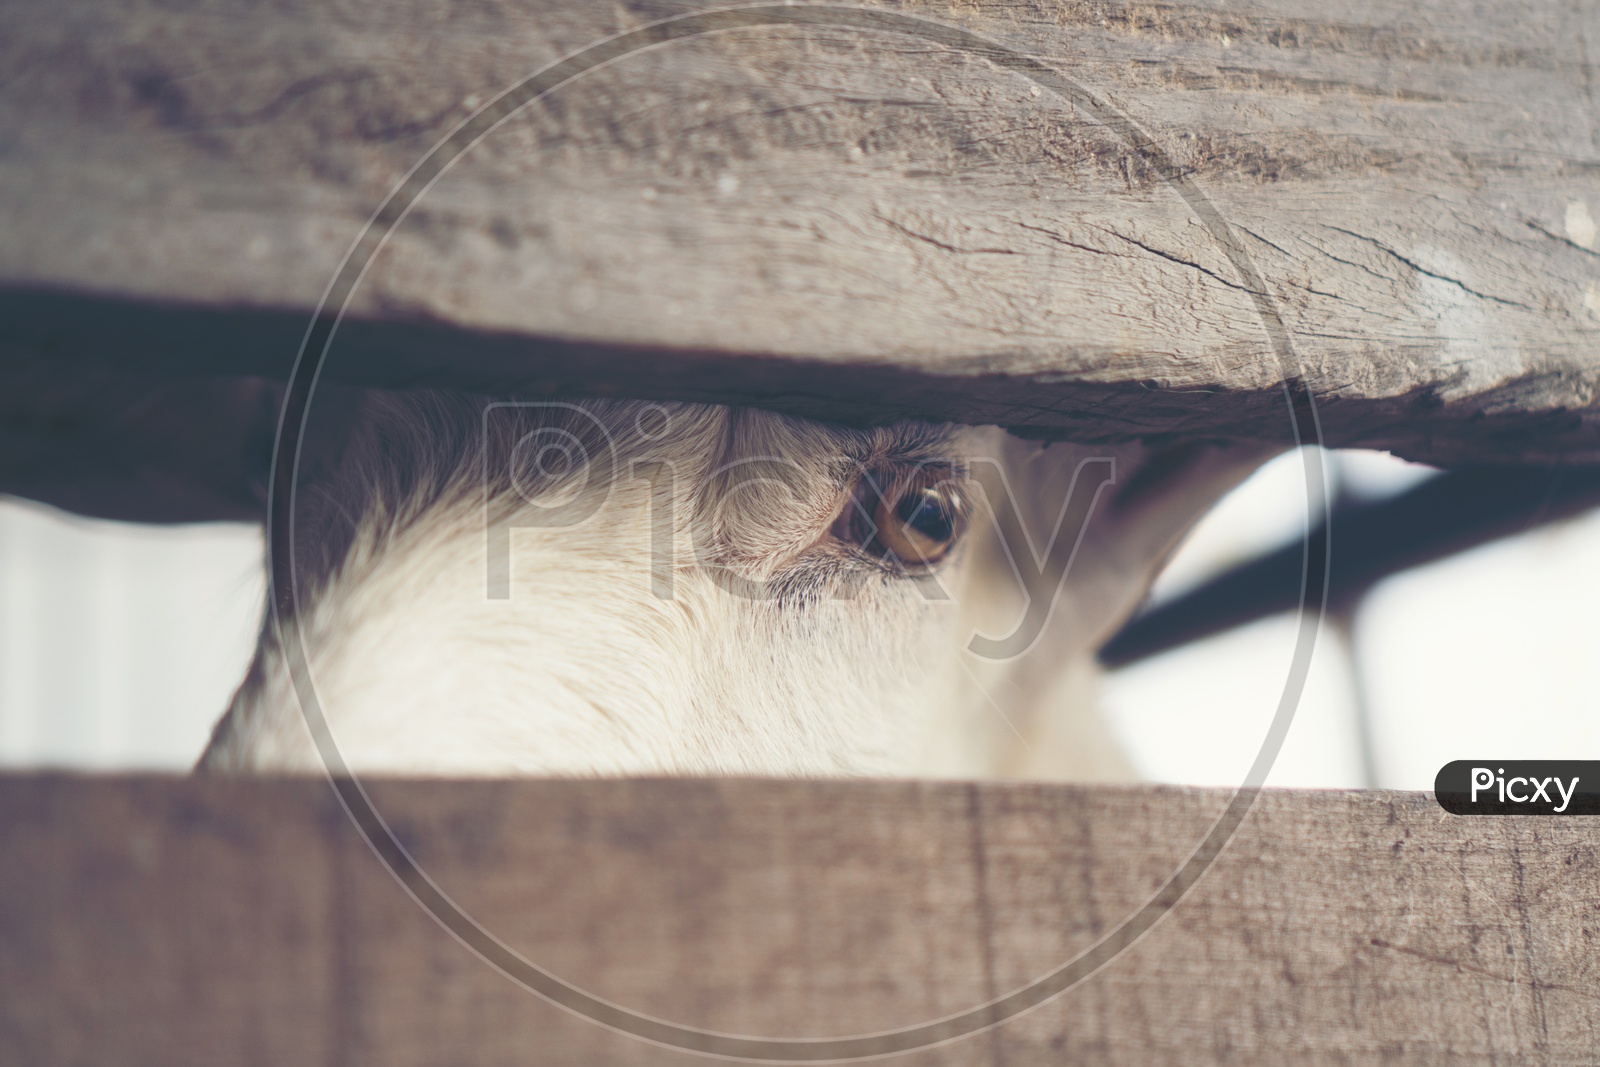 Goat's eyes, eyes that the animals communicate